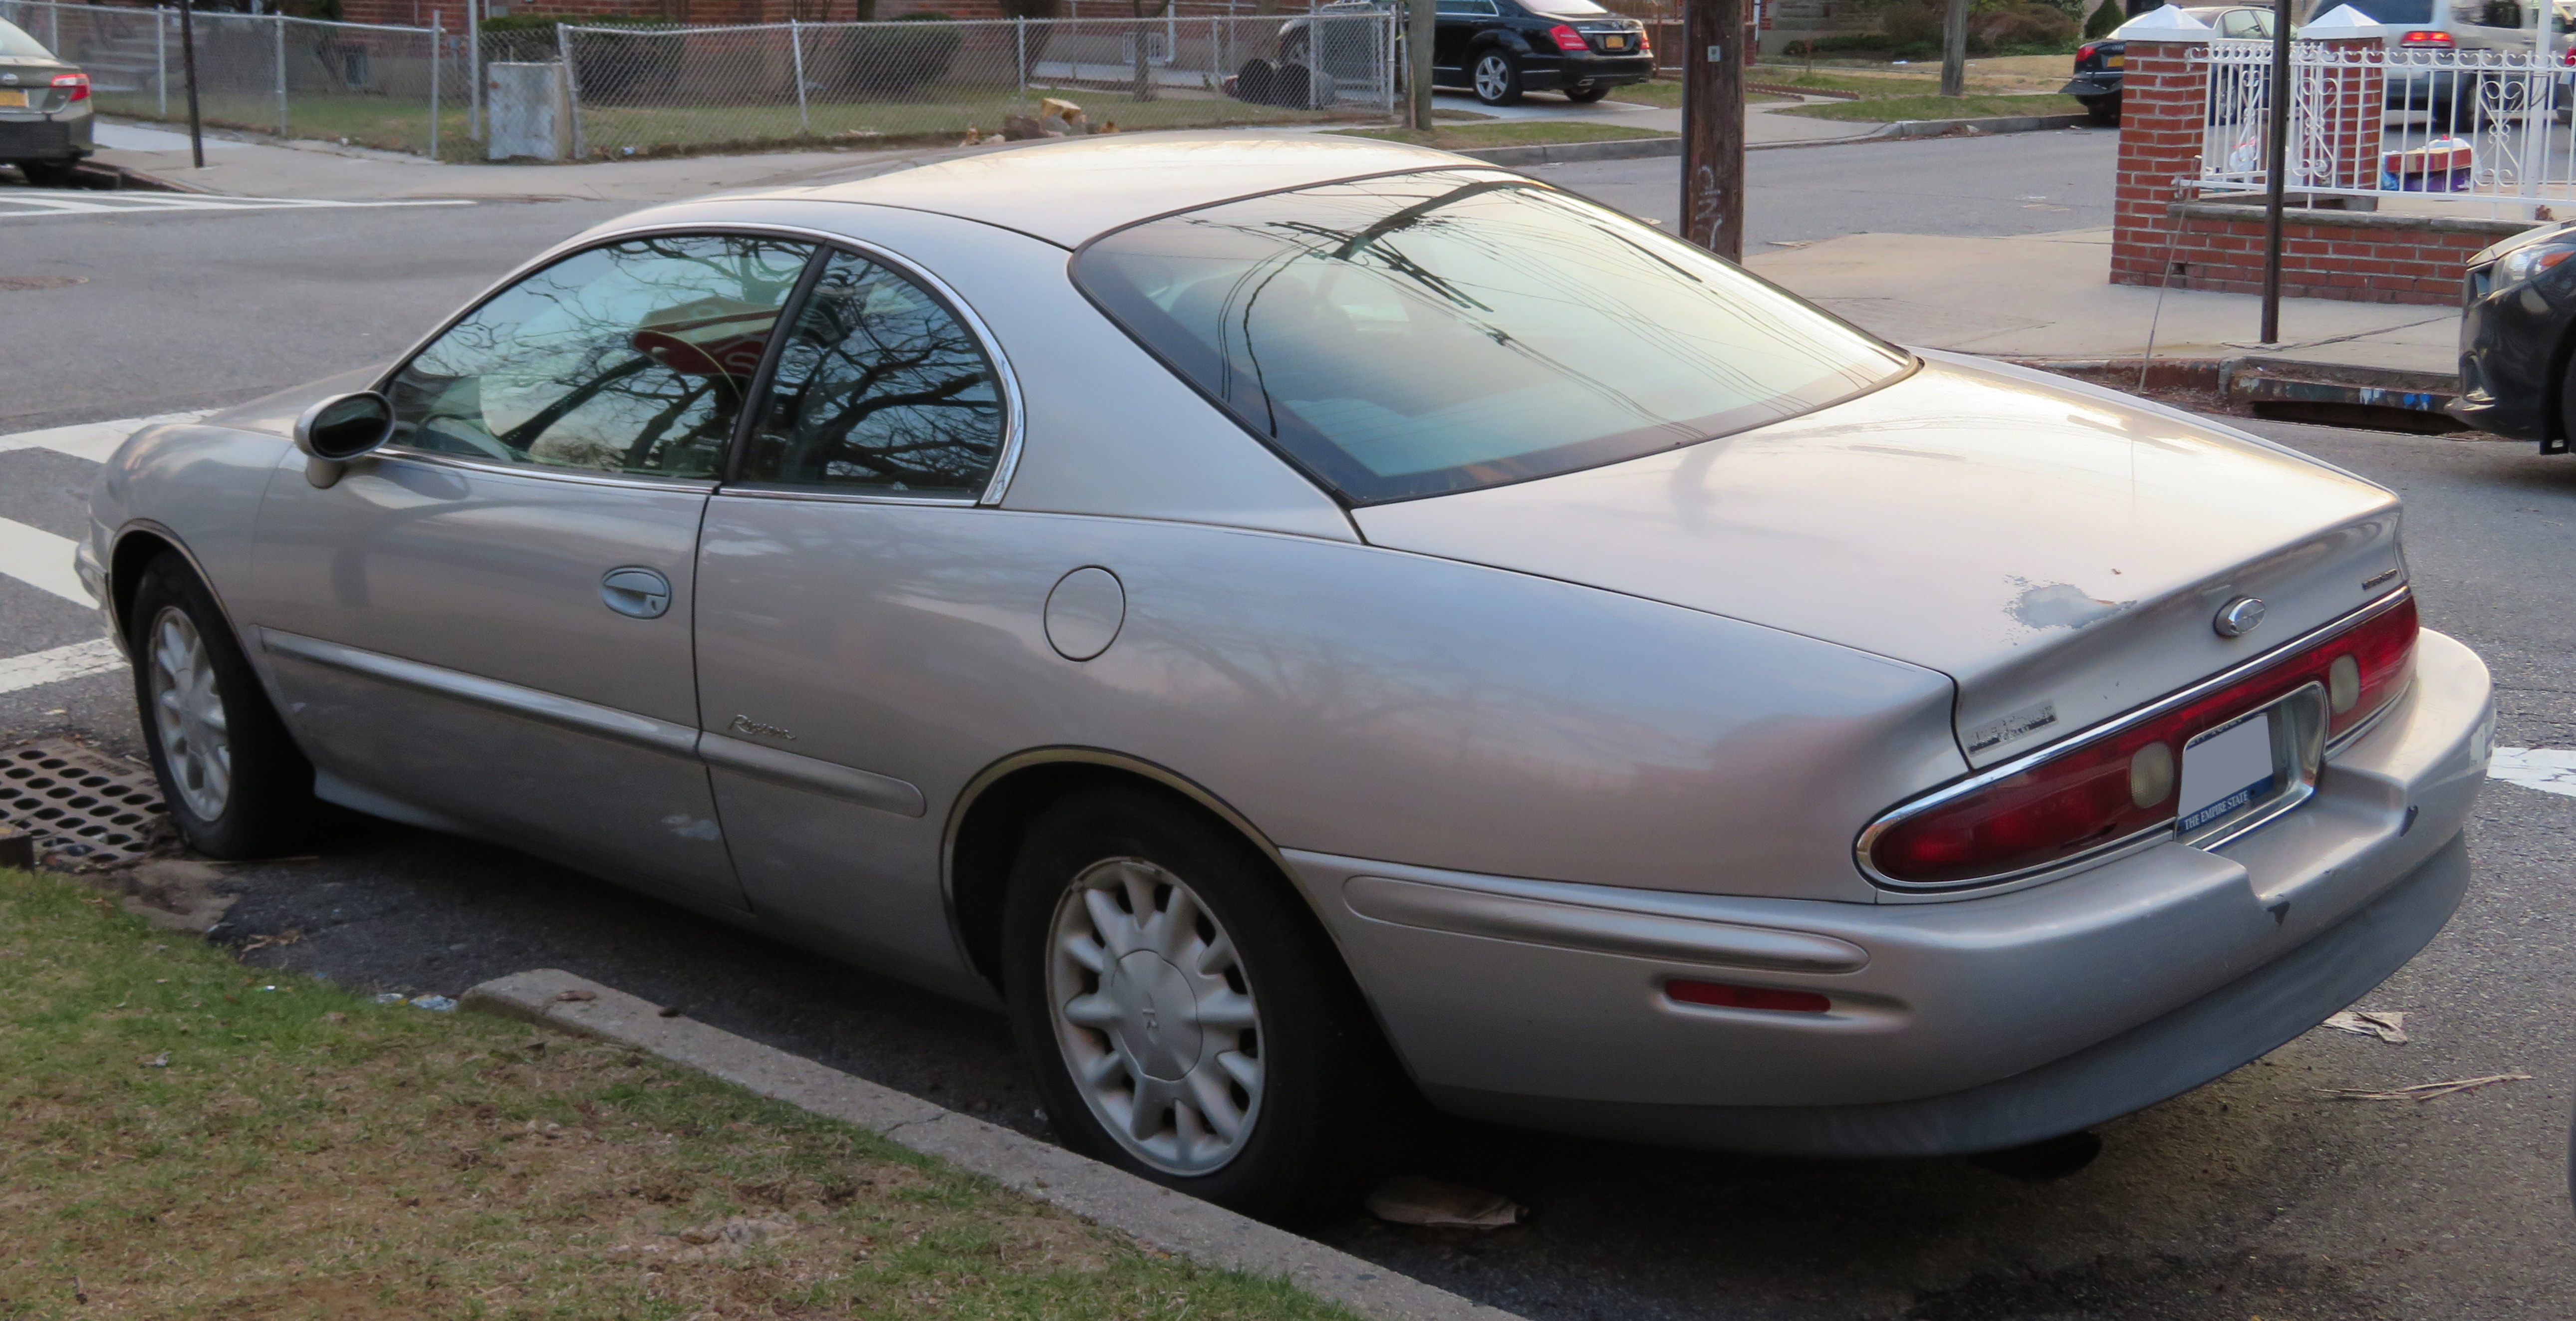 File:1998 Buick Riviera 3.8L rear 3.15.19.jpg - Wikimedia Commons